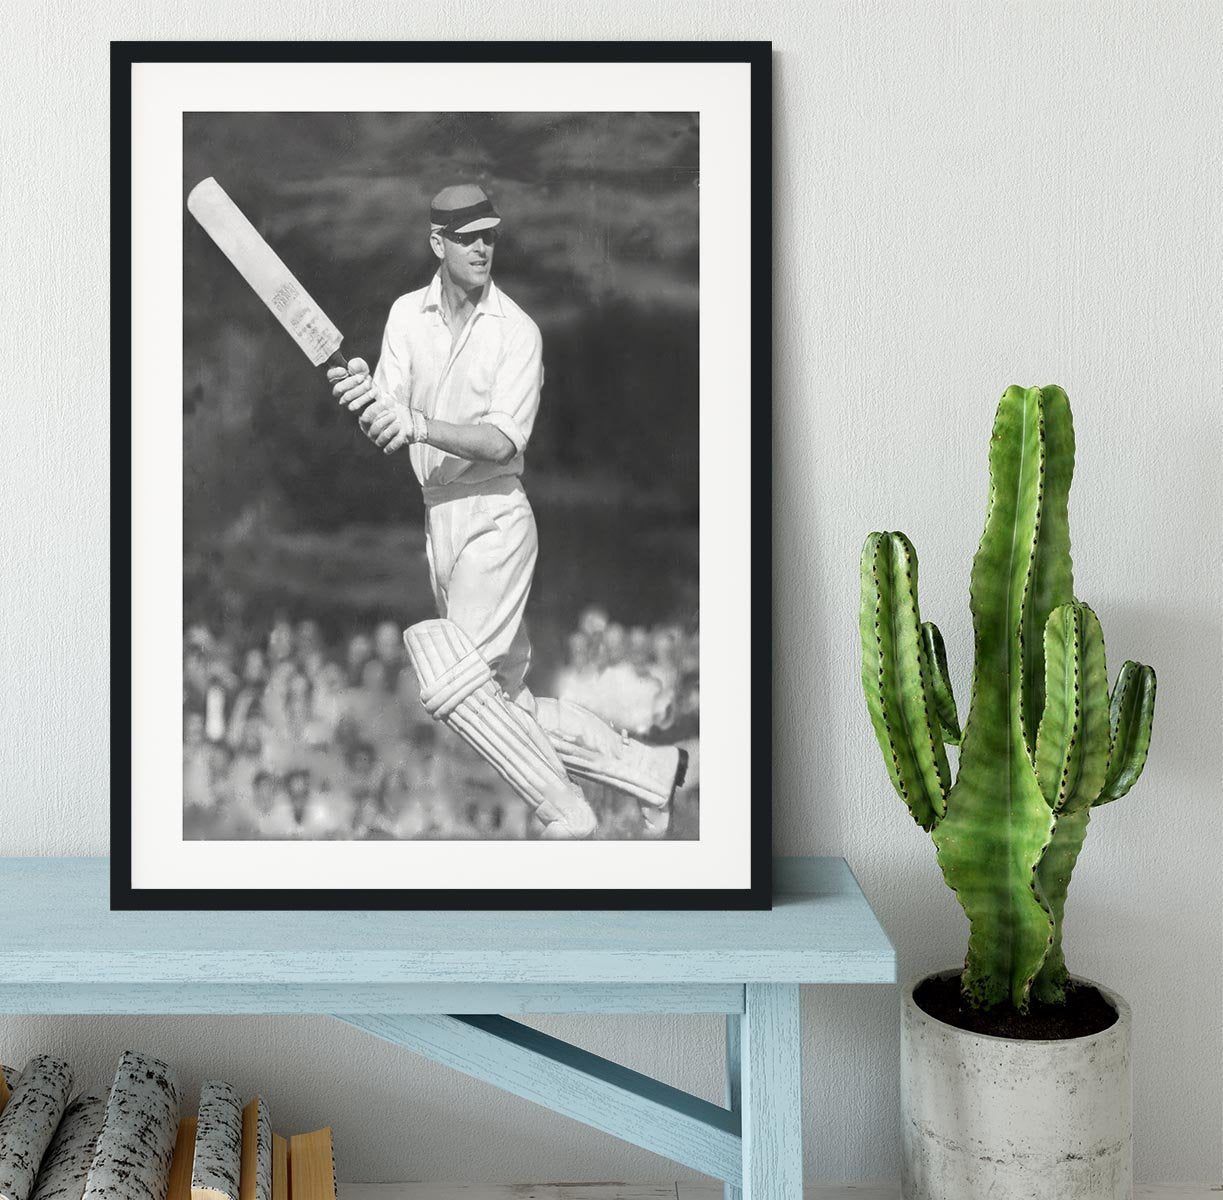 Prince Philip batting at a charity cricket match Framed Print - Canvas Art Rocks - 1